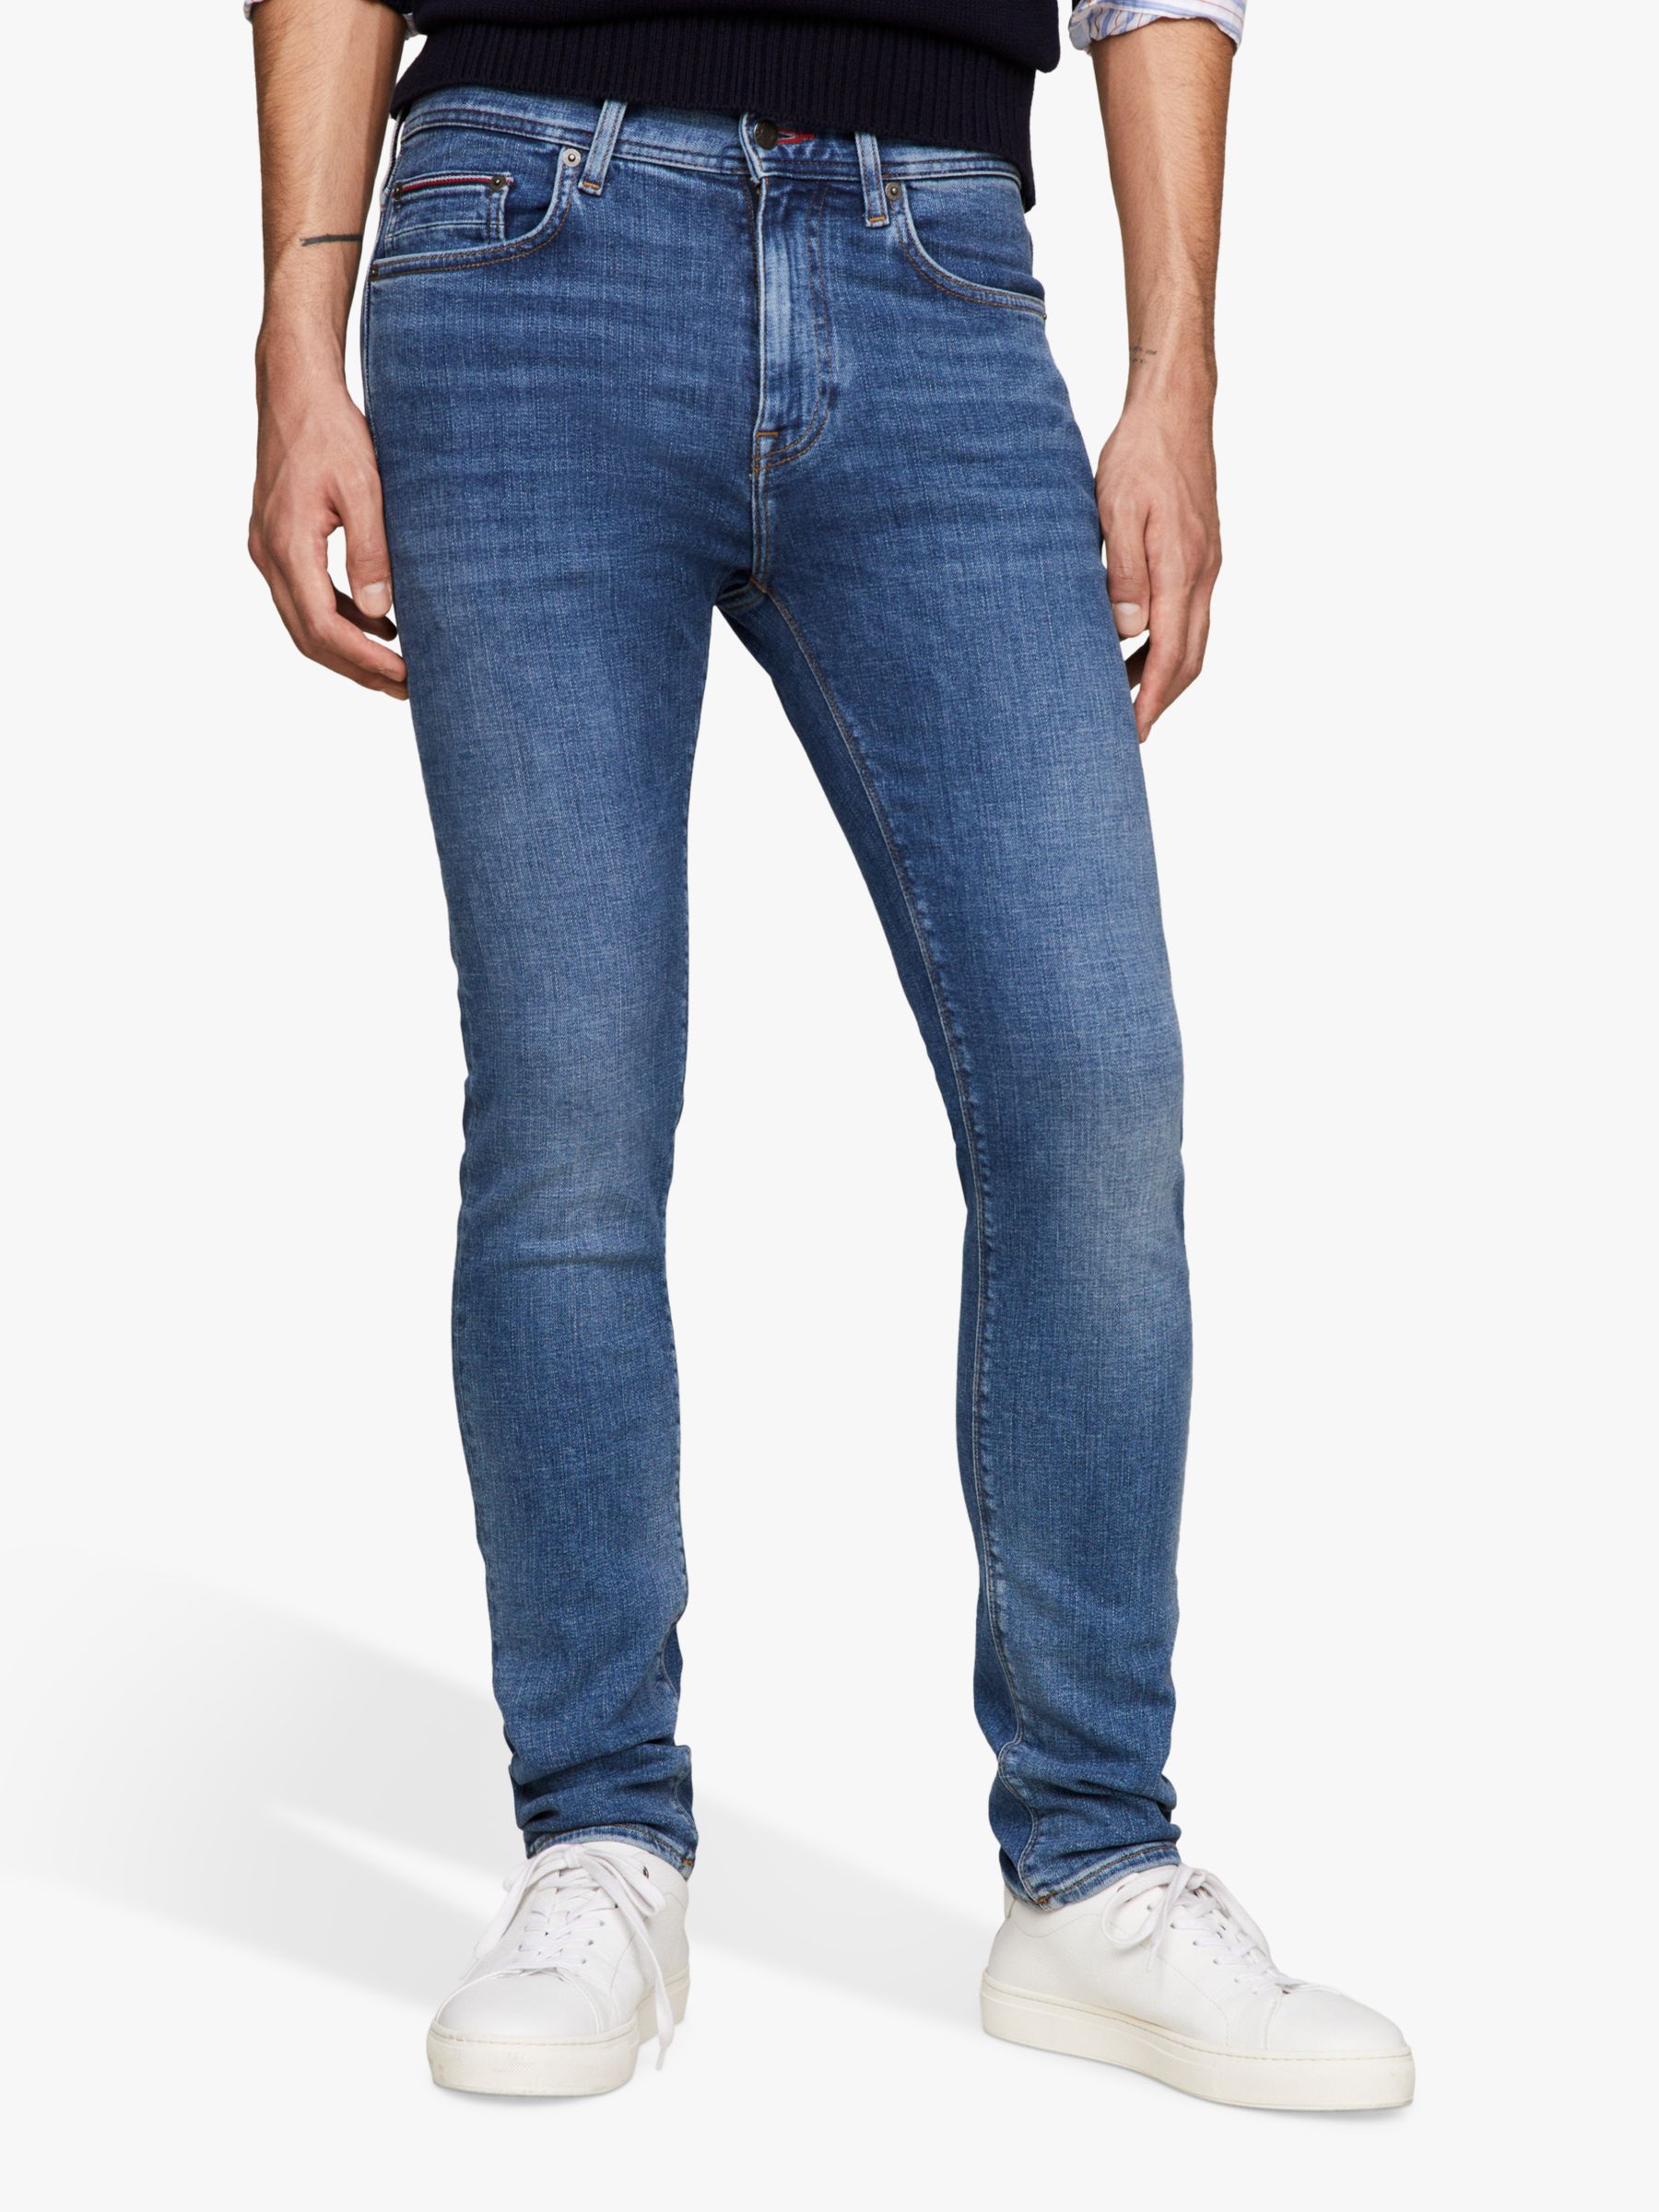 Tommy Hilfiger Beecker Slim Fit Jeans, Blue, 32S